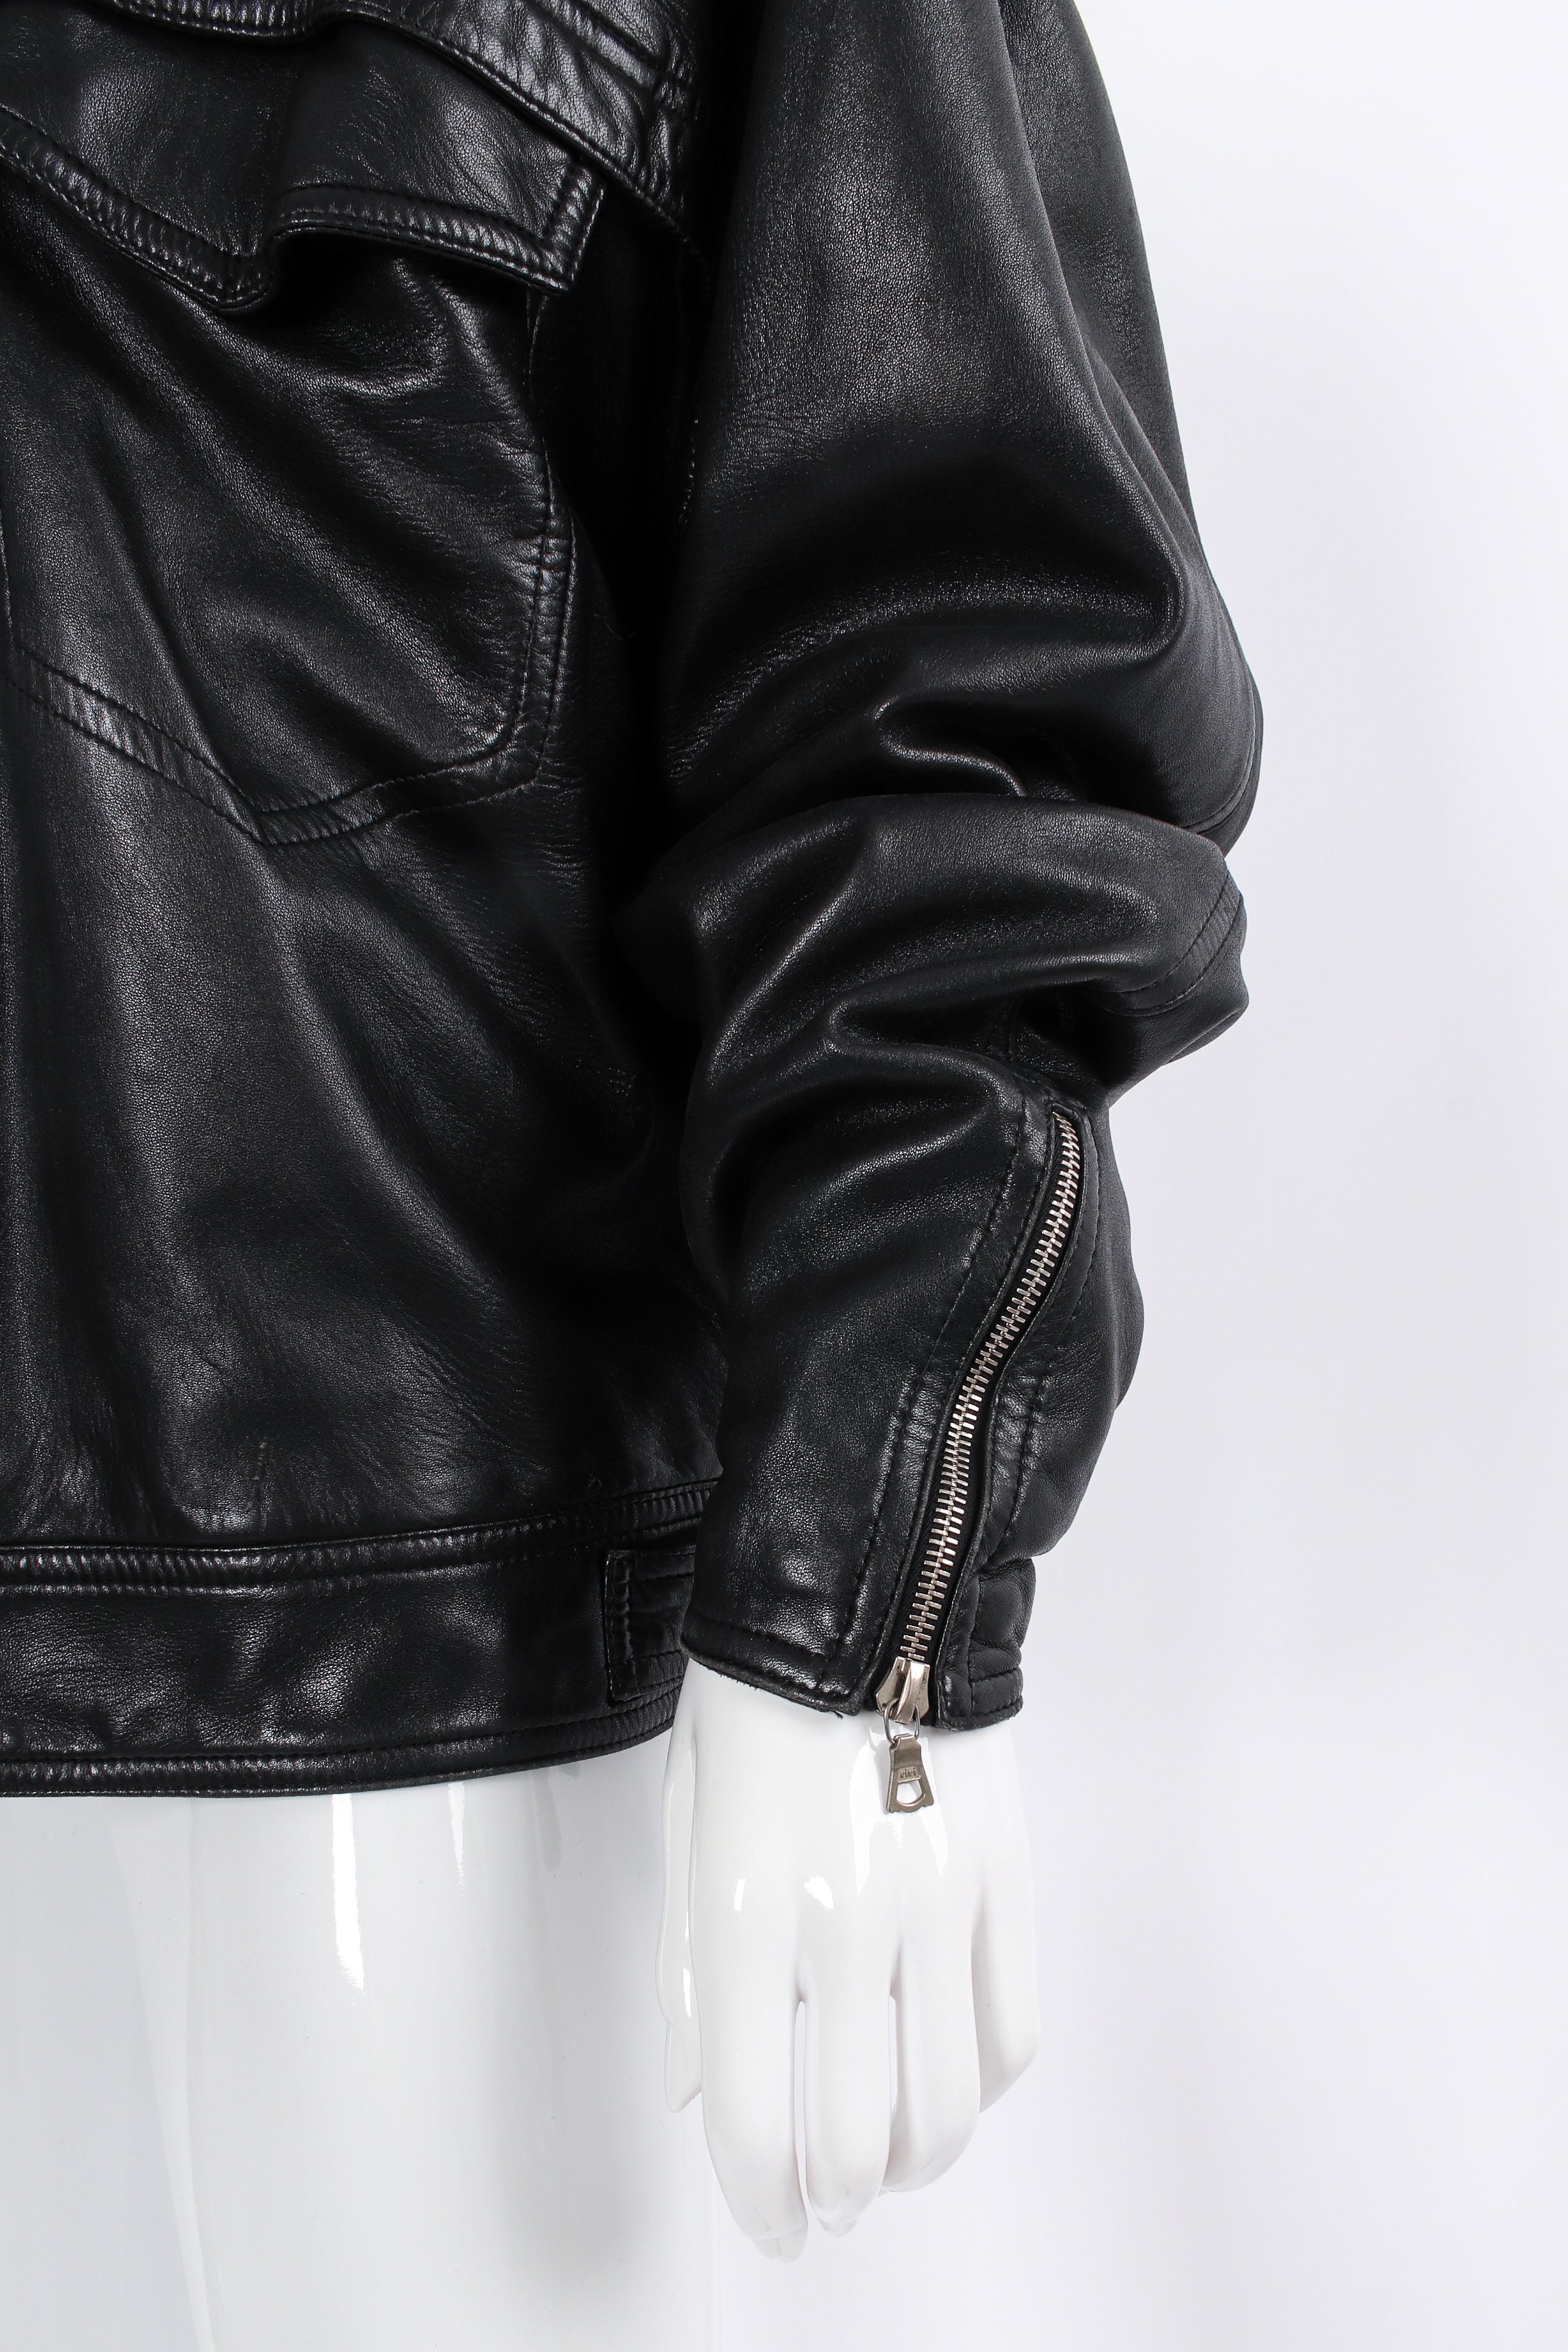 Vintage Gianni Versace Leather Bomber Jacket sleeve zipper  @ Recess LA